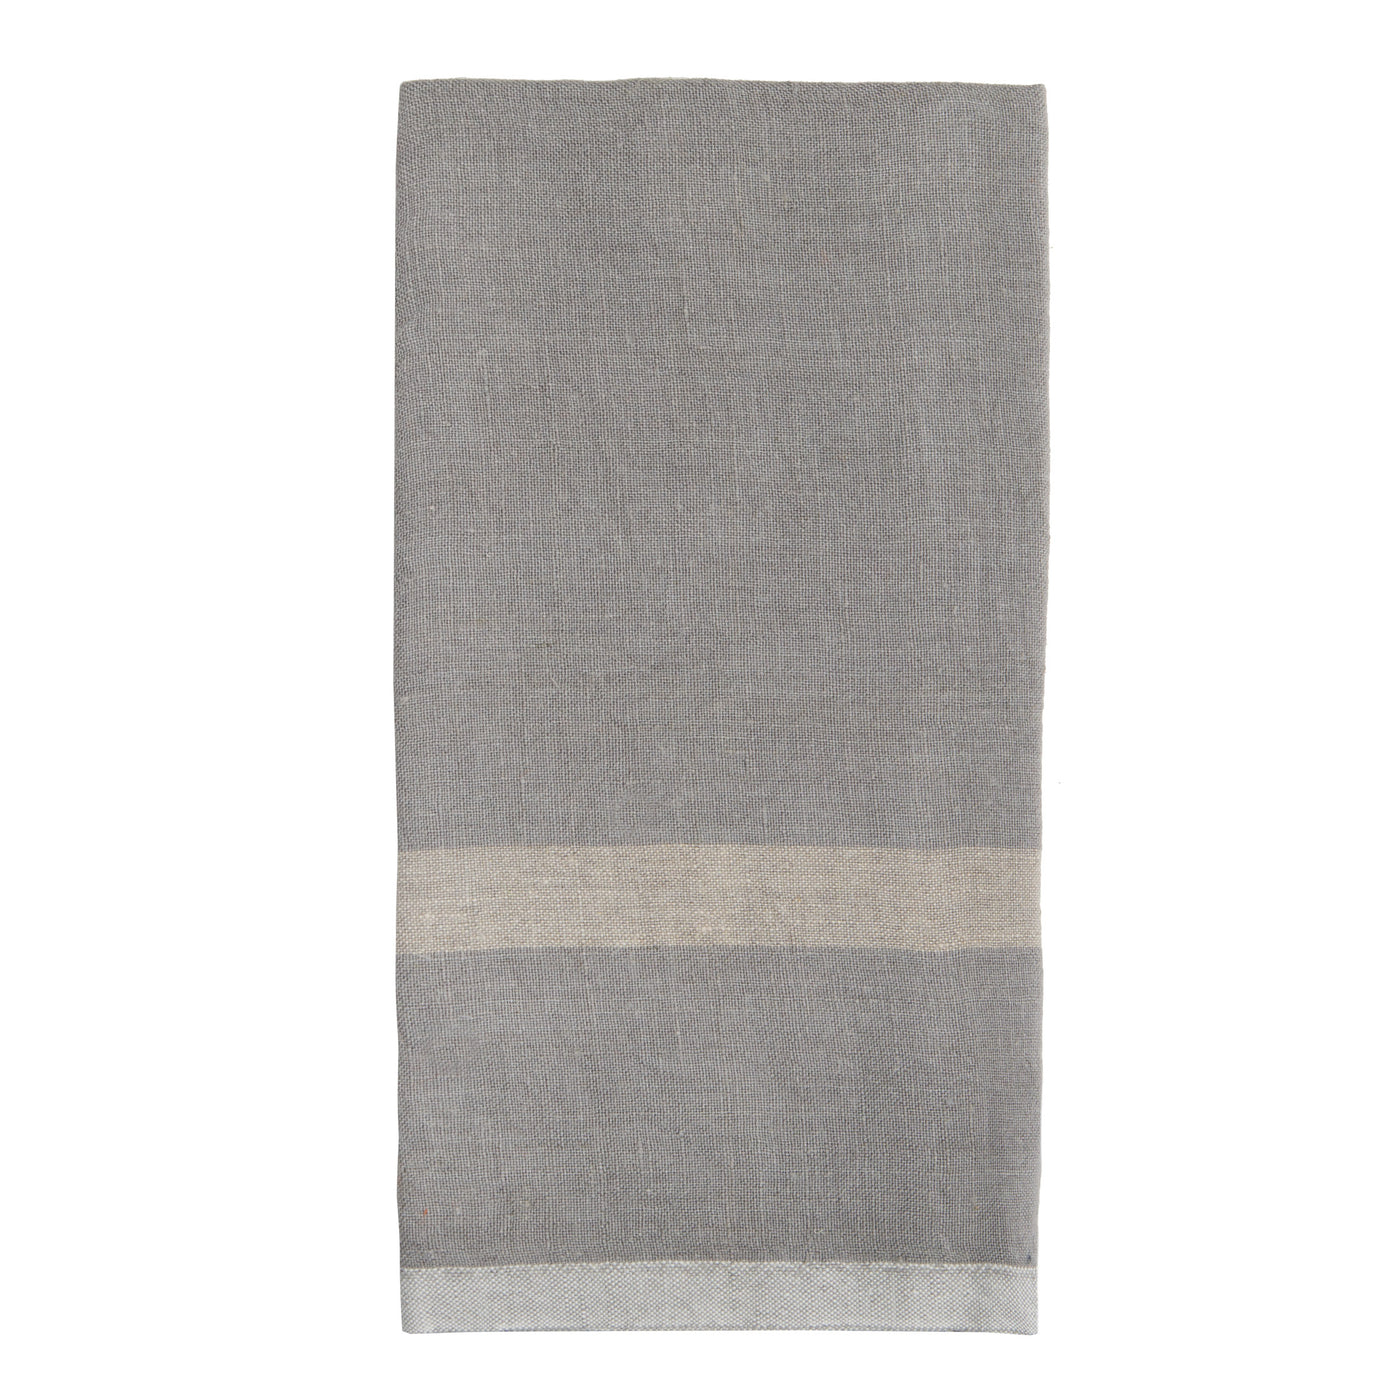 Laundered Linen Kitchen Towels Grey & Natural, Set of 2